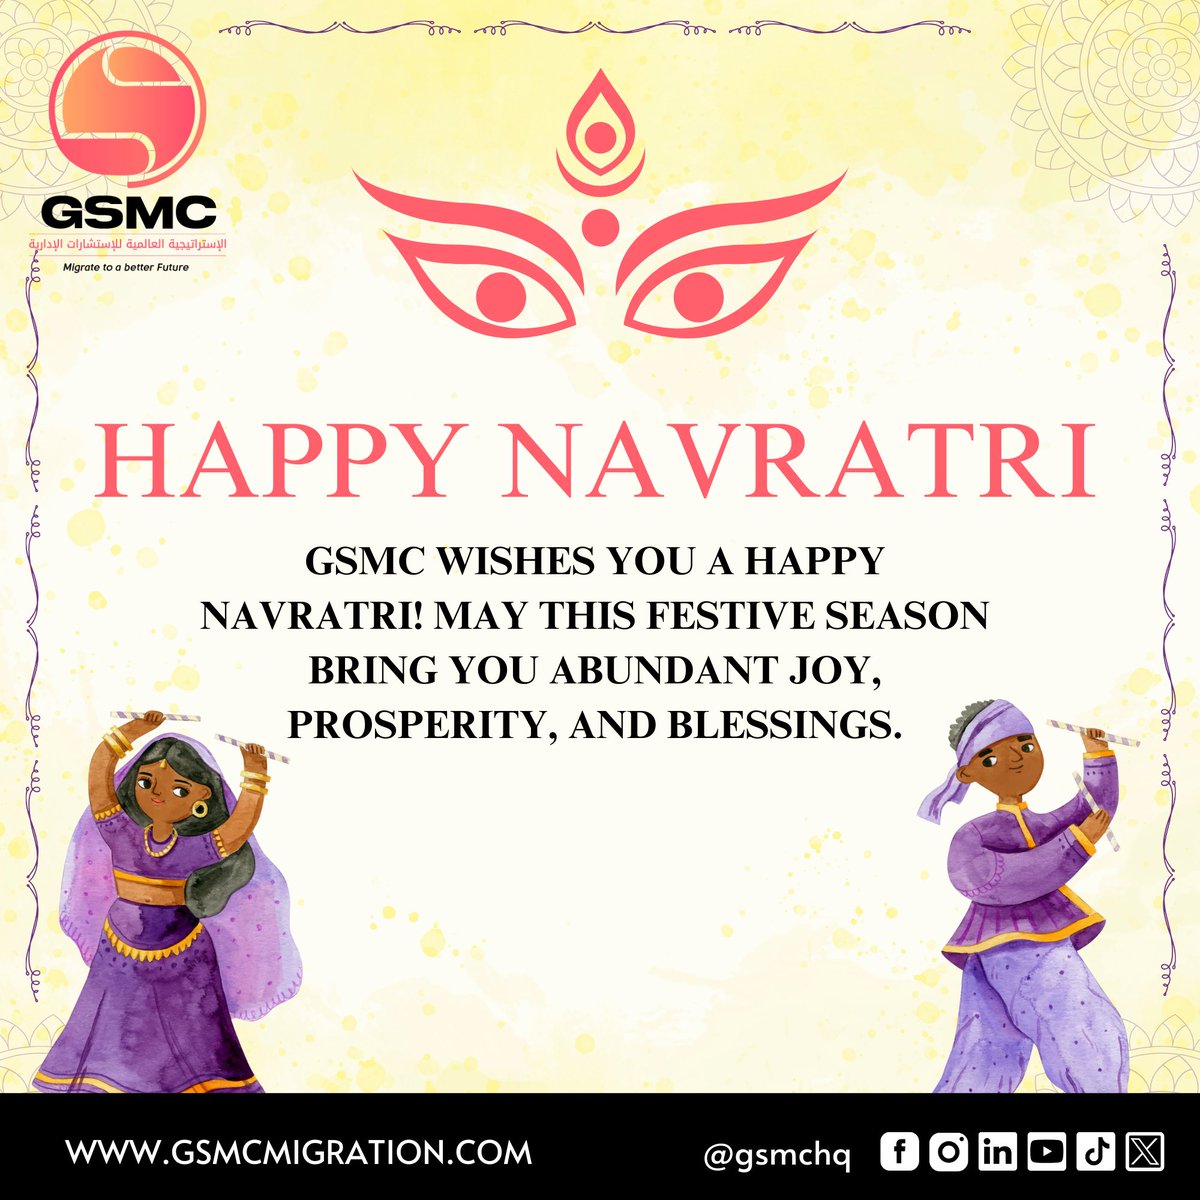 Experience the vibrant hues of Navratri with GSMC!
Let the festivities begin! 🌟🎉

Apply Now!
wa.me/96897419478

#GSMC #SkilledImmigrants #HappyNavratri #FestivalSeason #GSMCWishes #CelebrationTime #JoyousOccasion #ProsperityAndBlessings